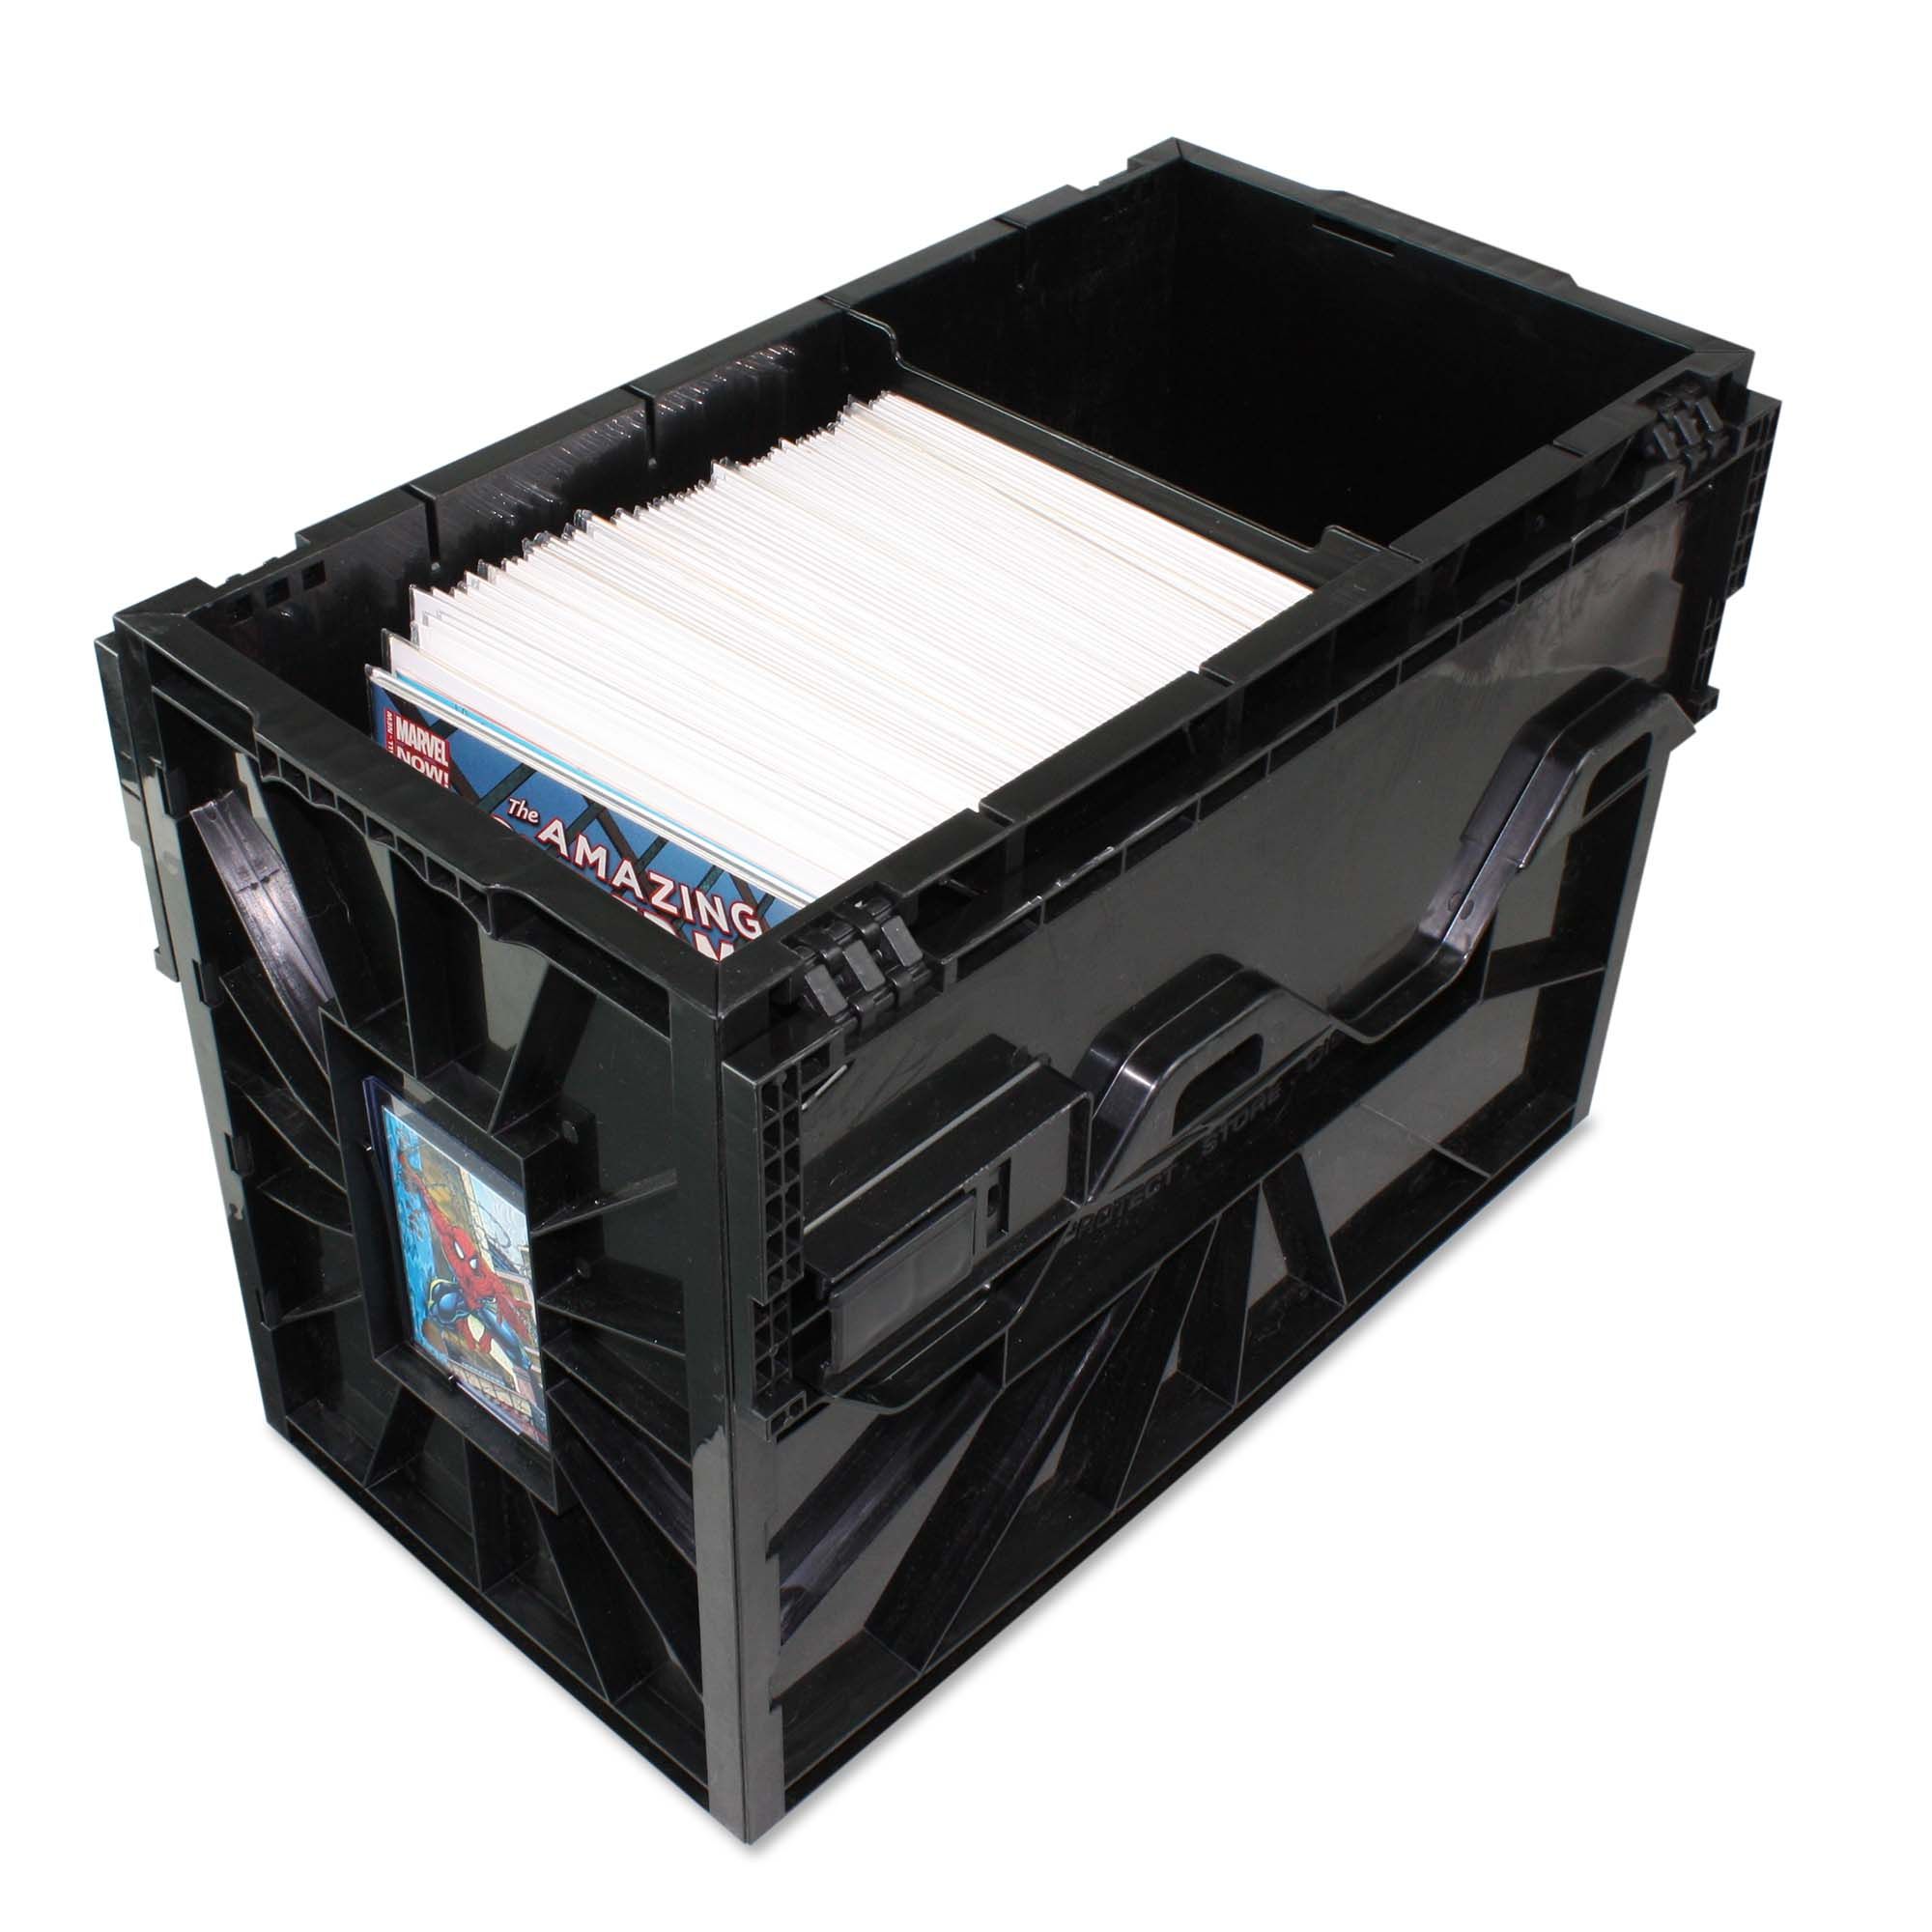 Magazine Storage Box., Archival Blue-Gray Corrugated, 11-1/2 x 9 x 15.,  Holds 150 magazines. 2